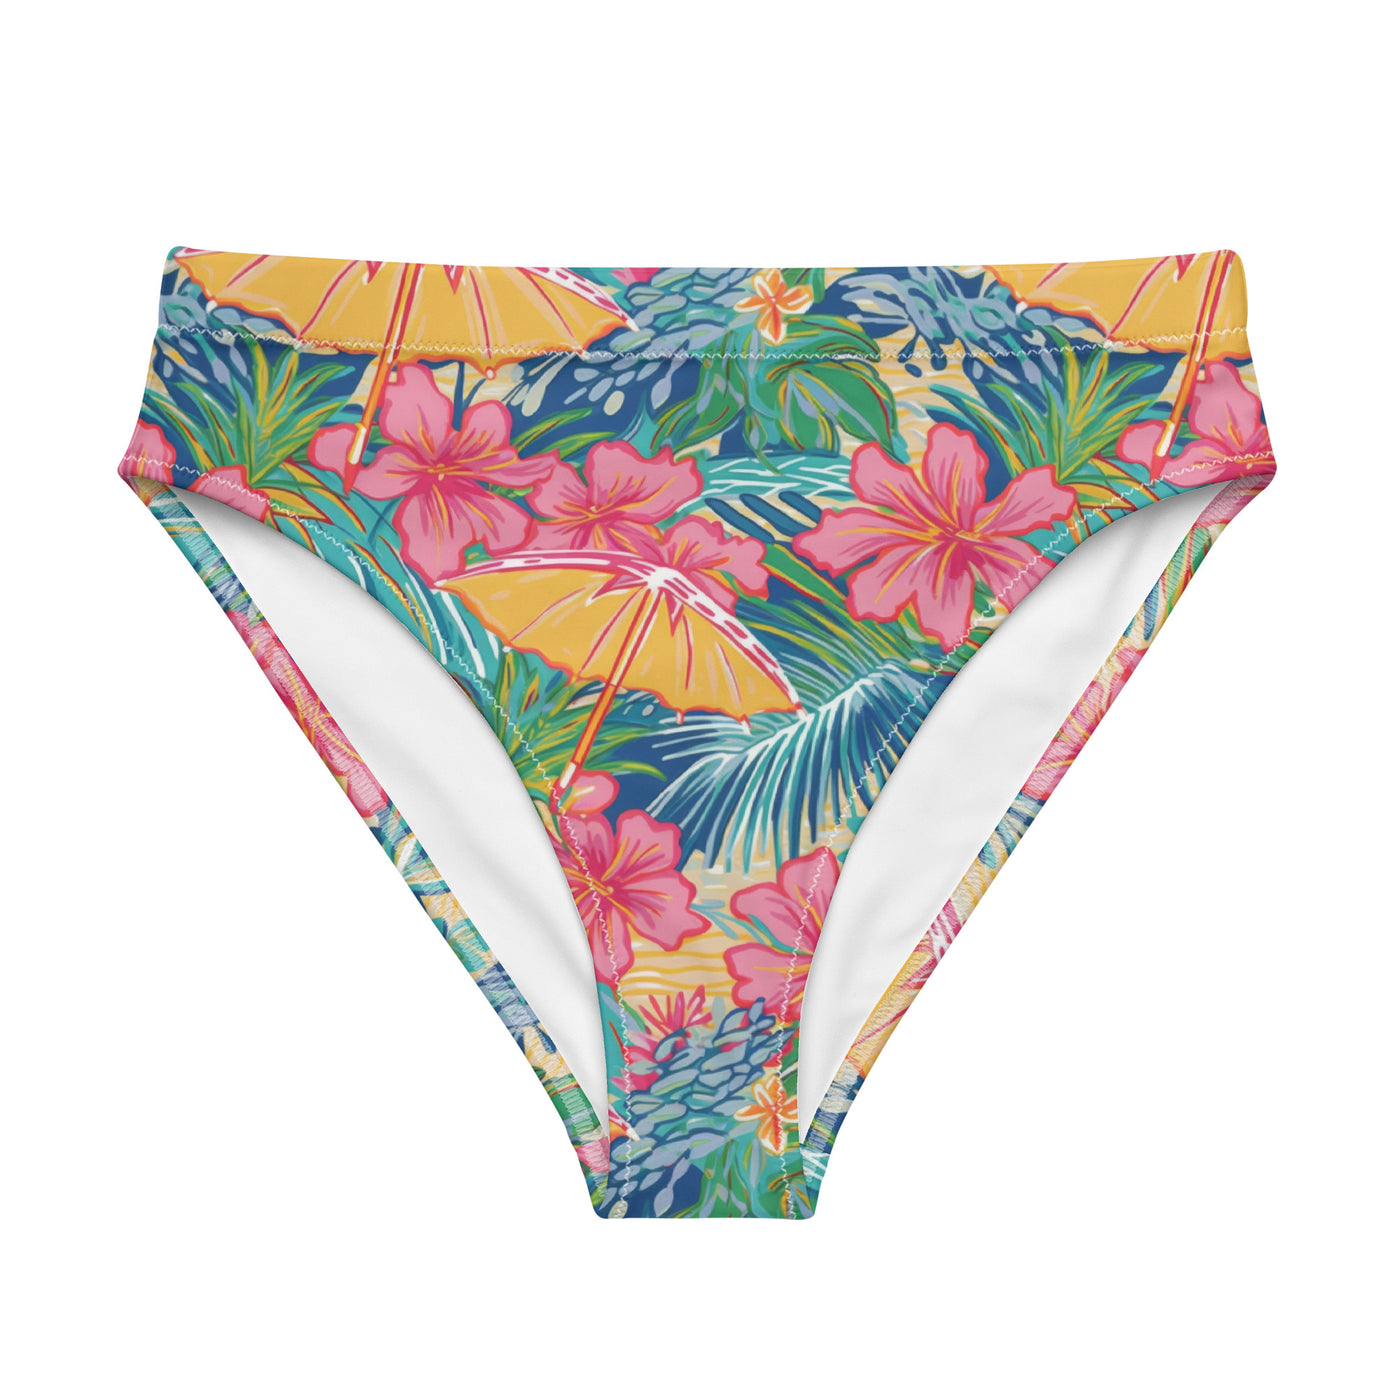 Sunny Days Bikini Bottom - Coastal Cool - Swimwear and Beachwear - Recycled fabrics